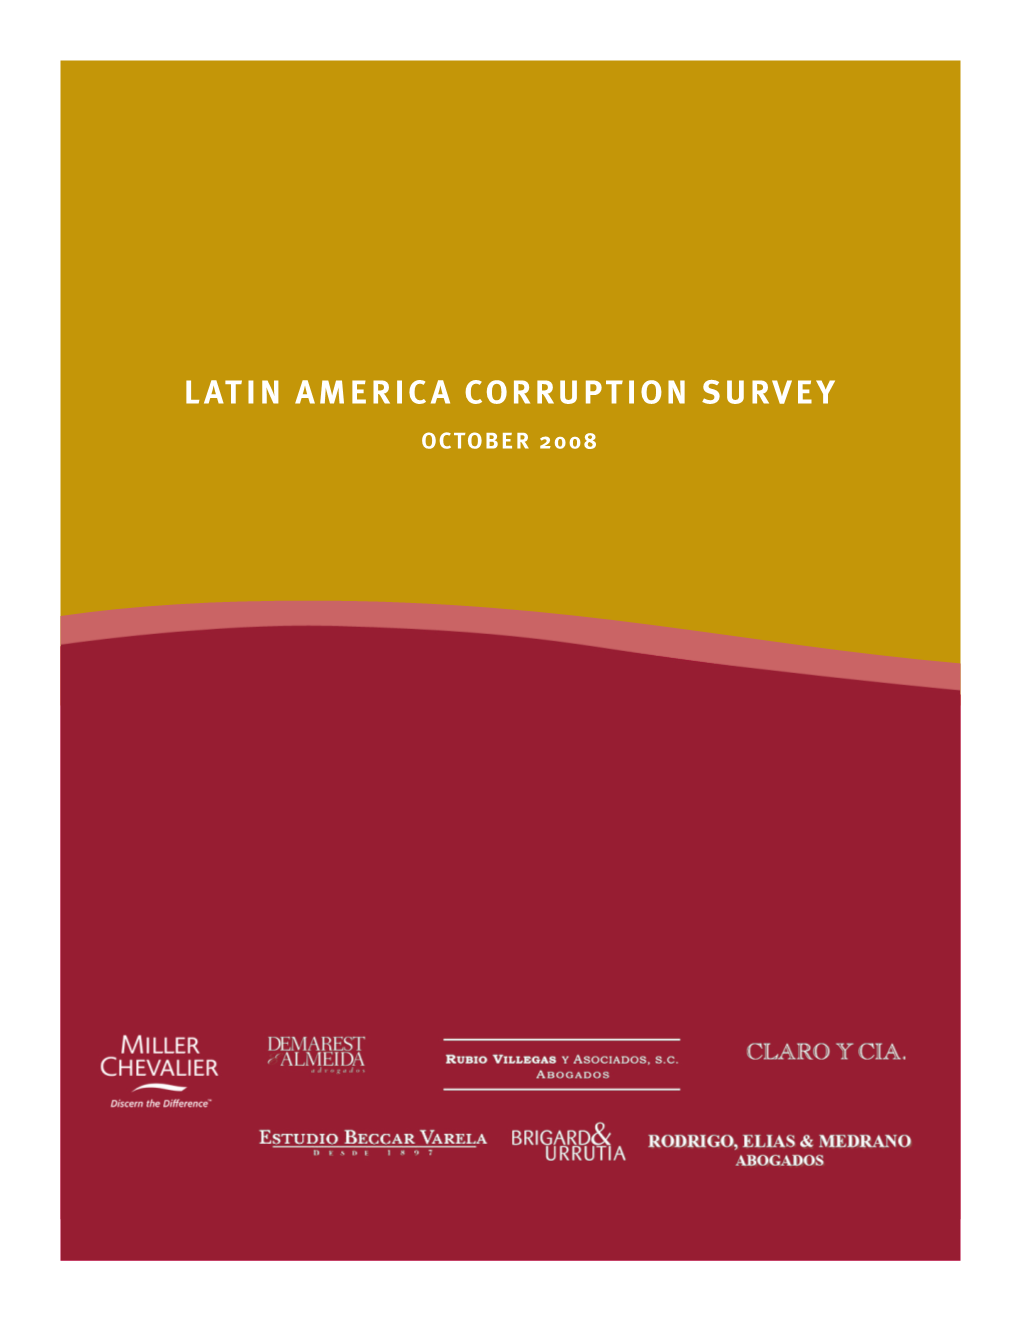 Latin America Corruption Survey Include